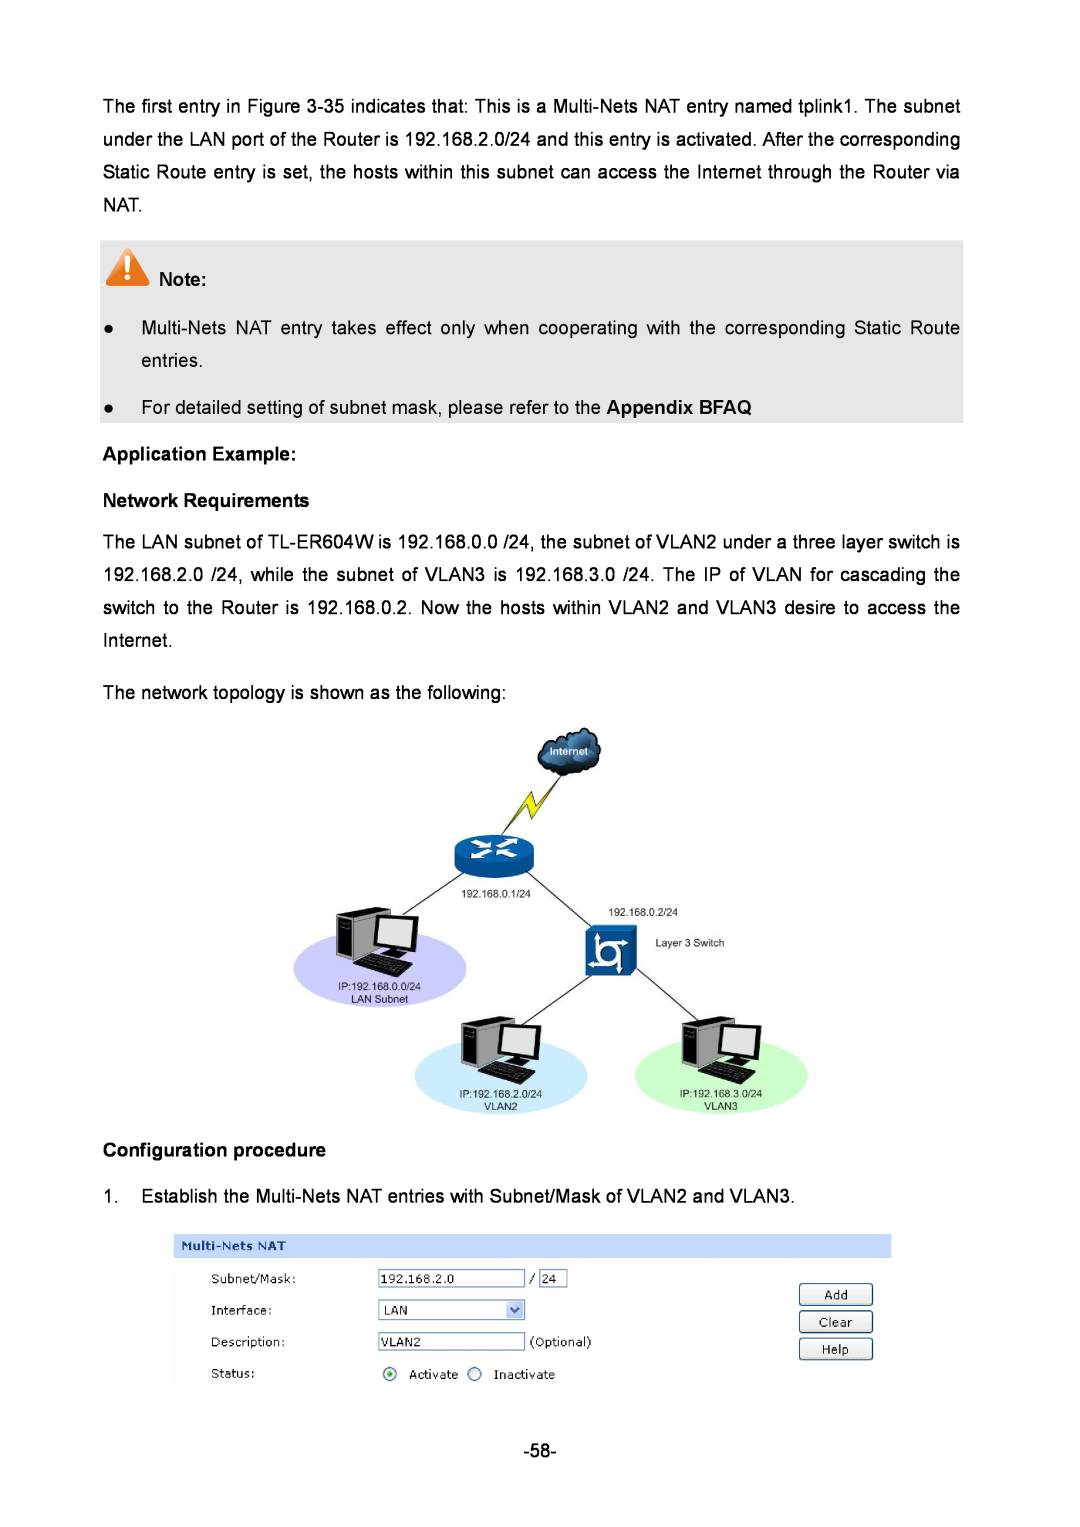 TP-Link TL-ER604W manual Application Example Network Requirements, Configuration procedure 